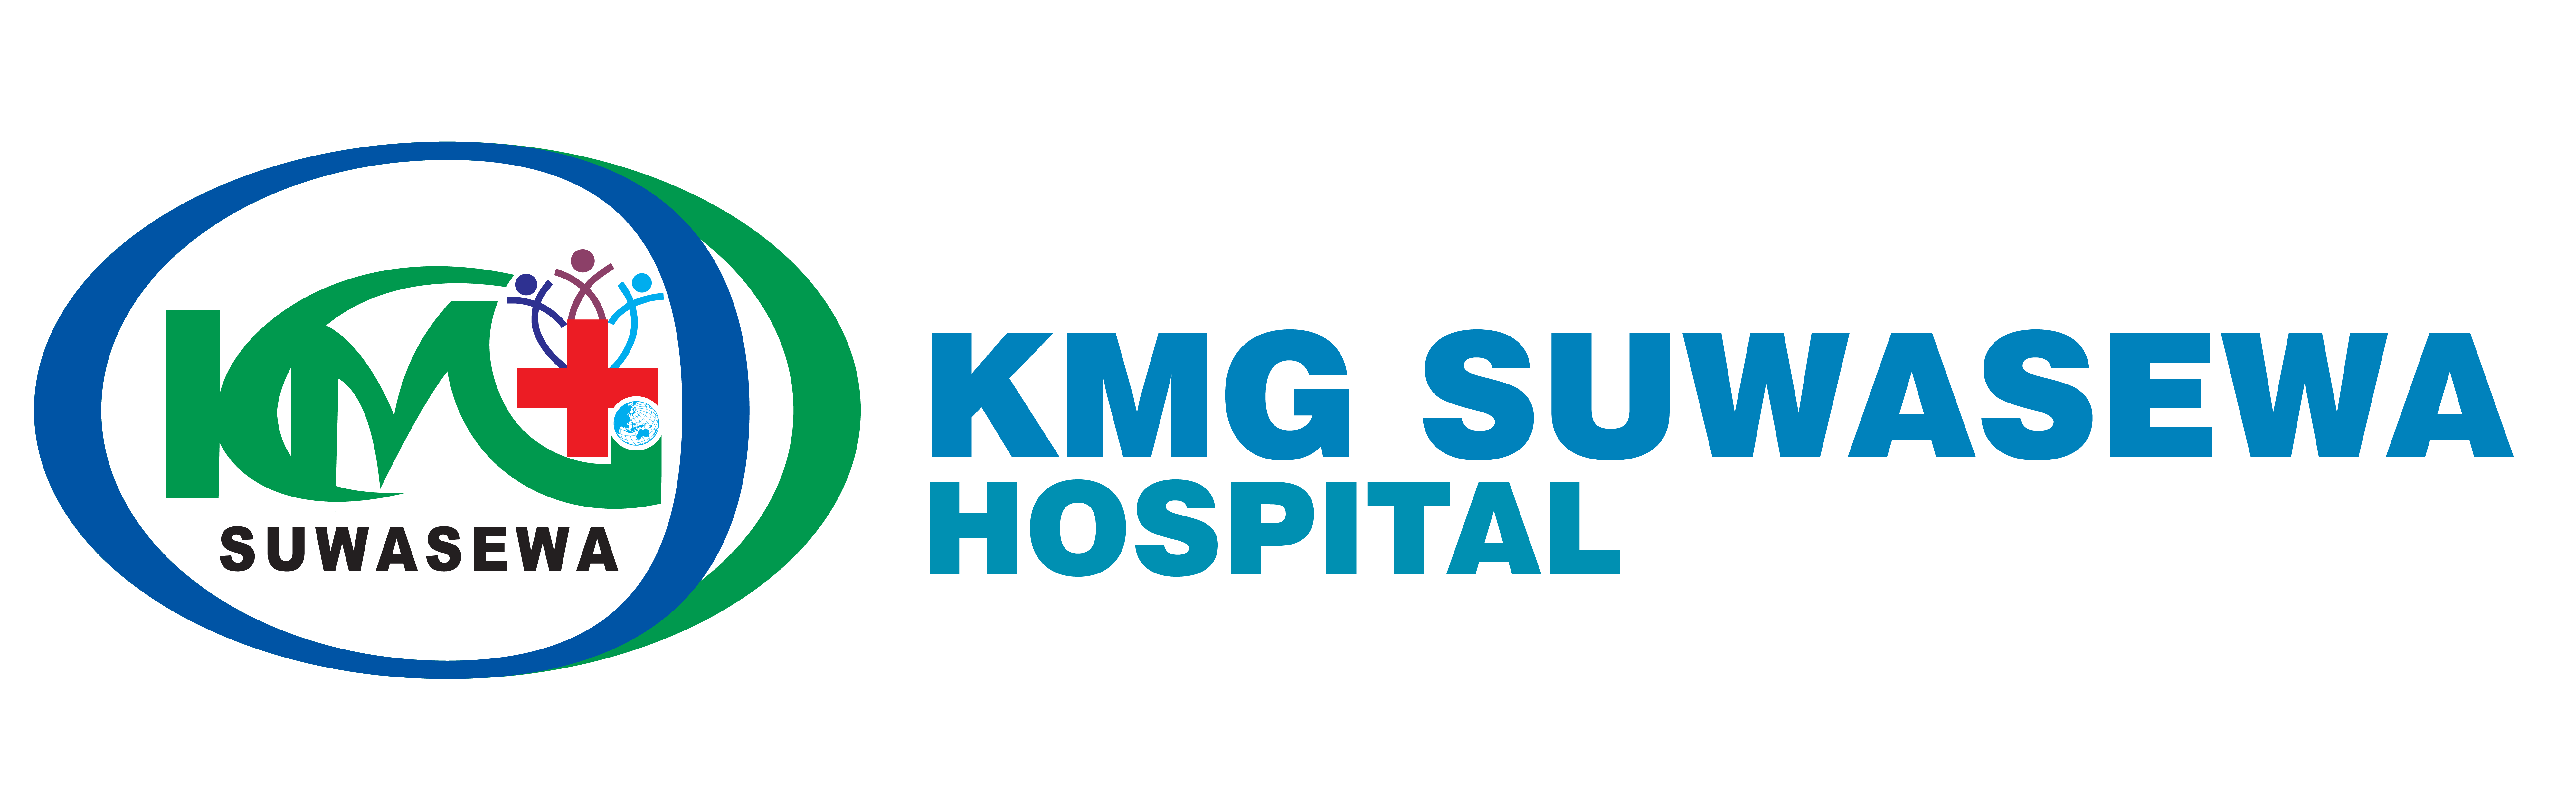 KMG Suwasewa Hospital